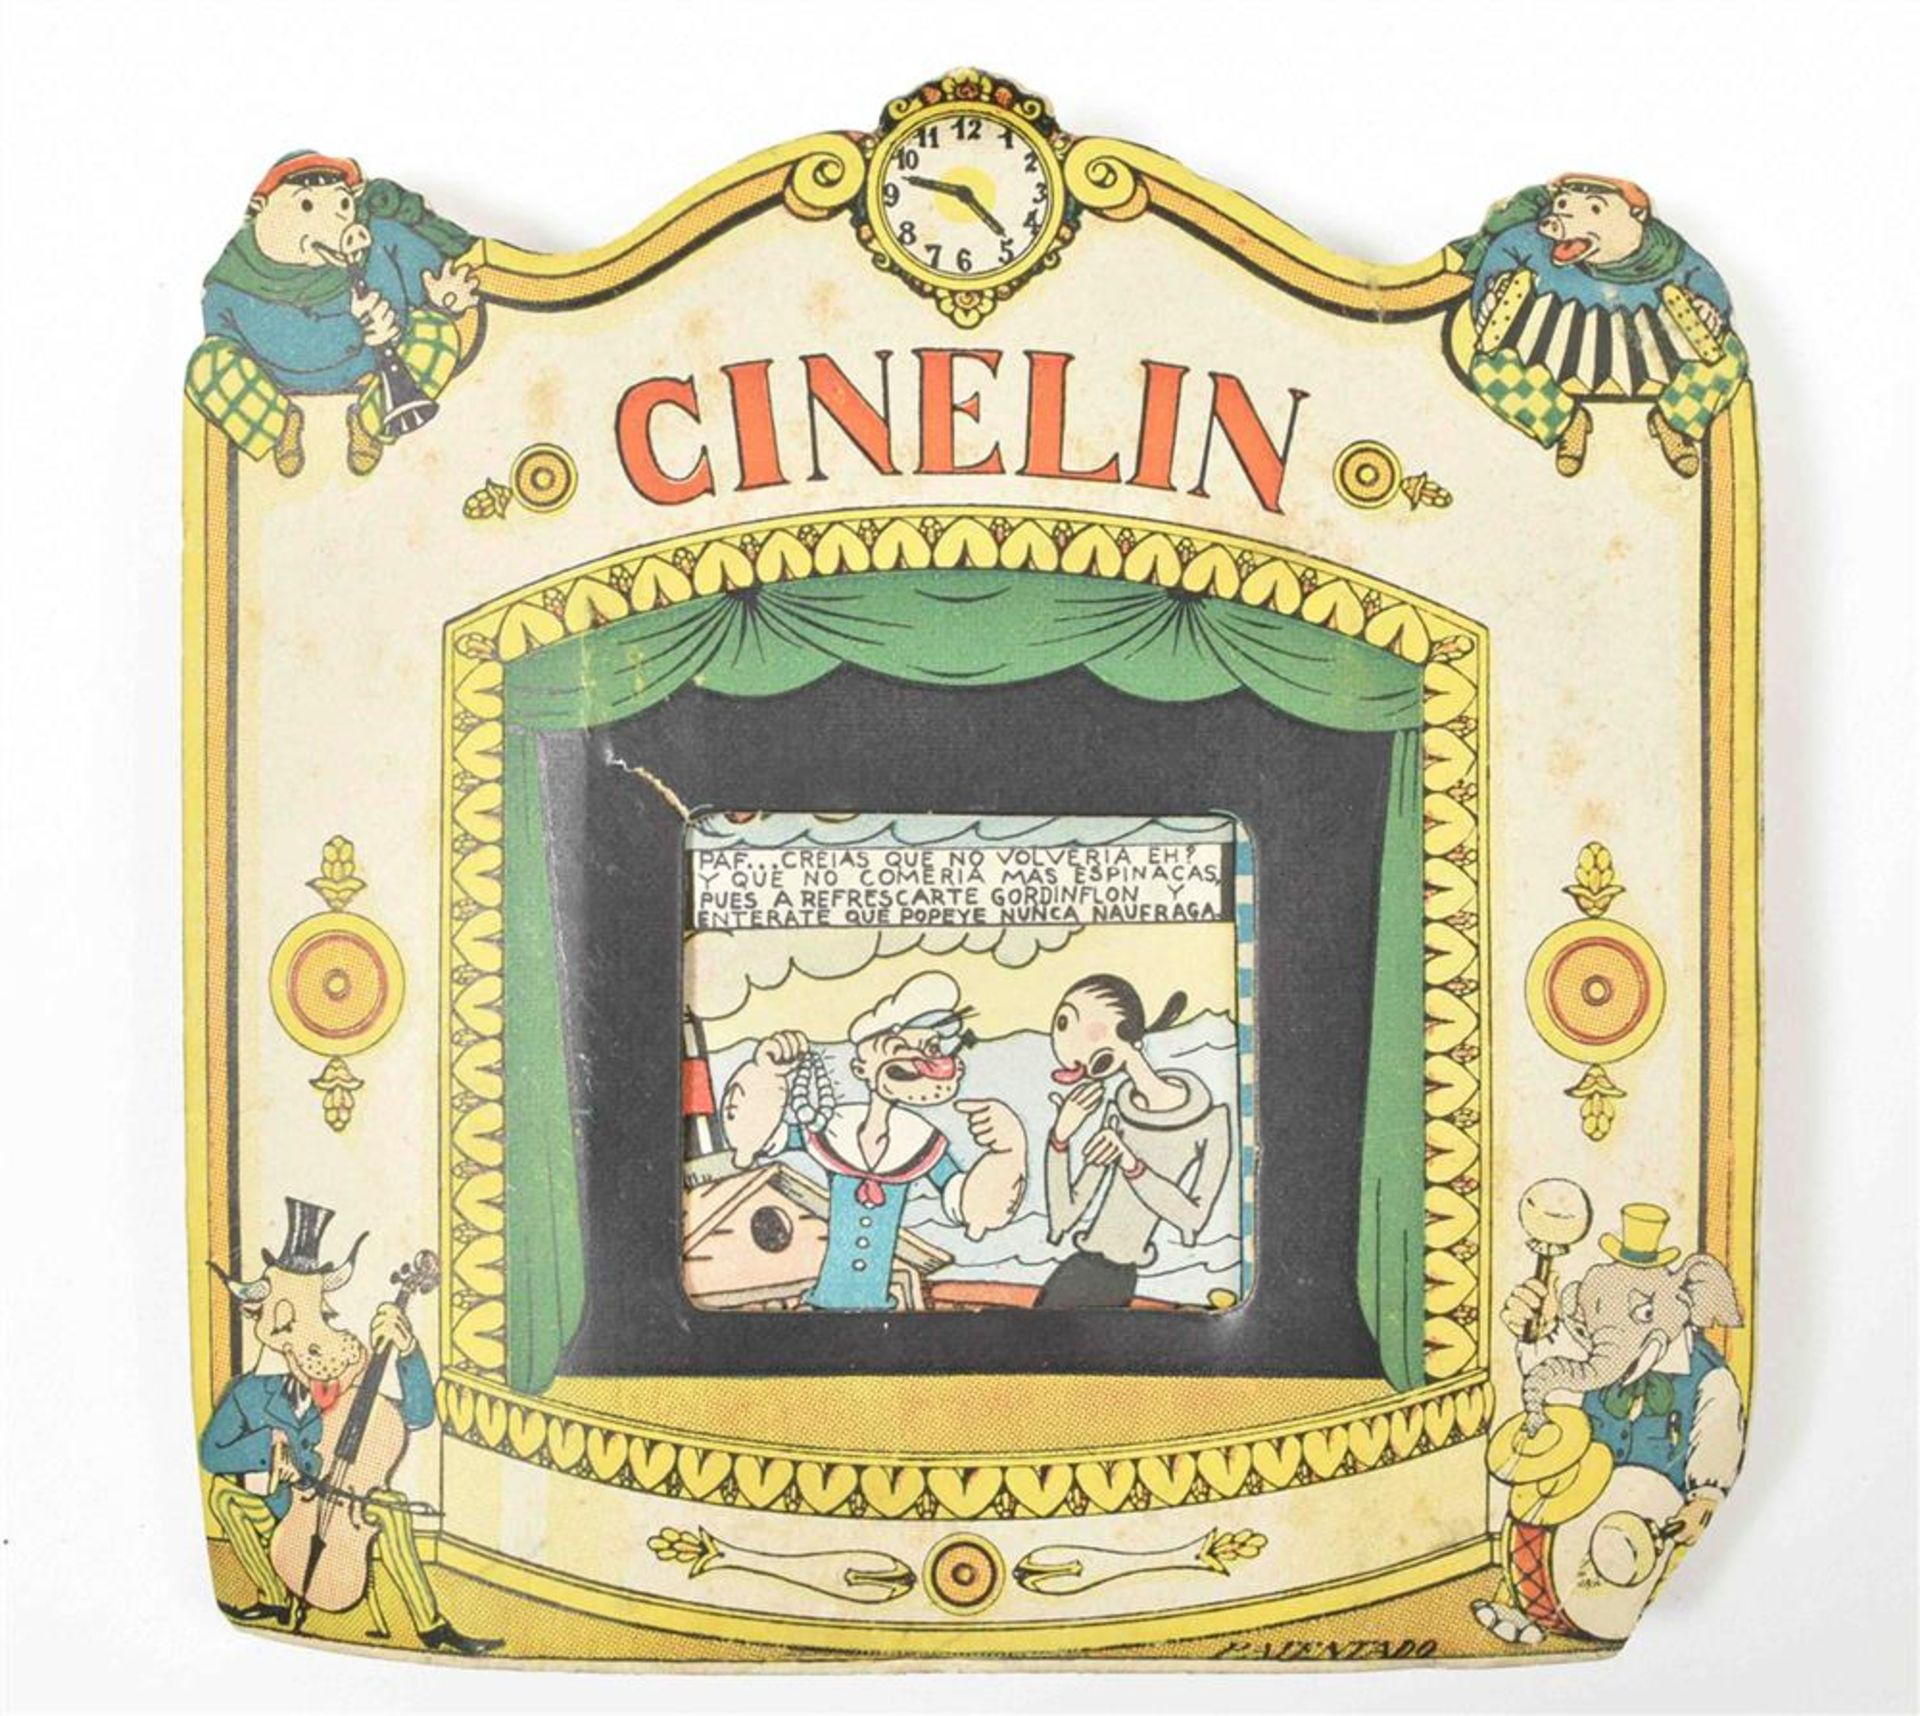 [Diorama/Paper theatre] "Cinelin" scrolling theatre